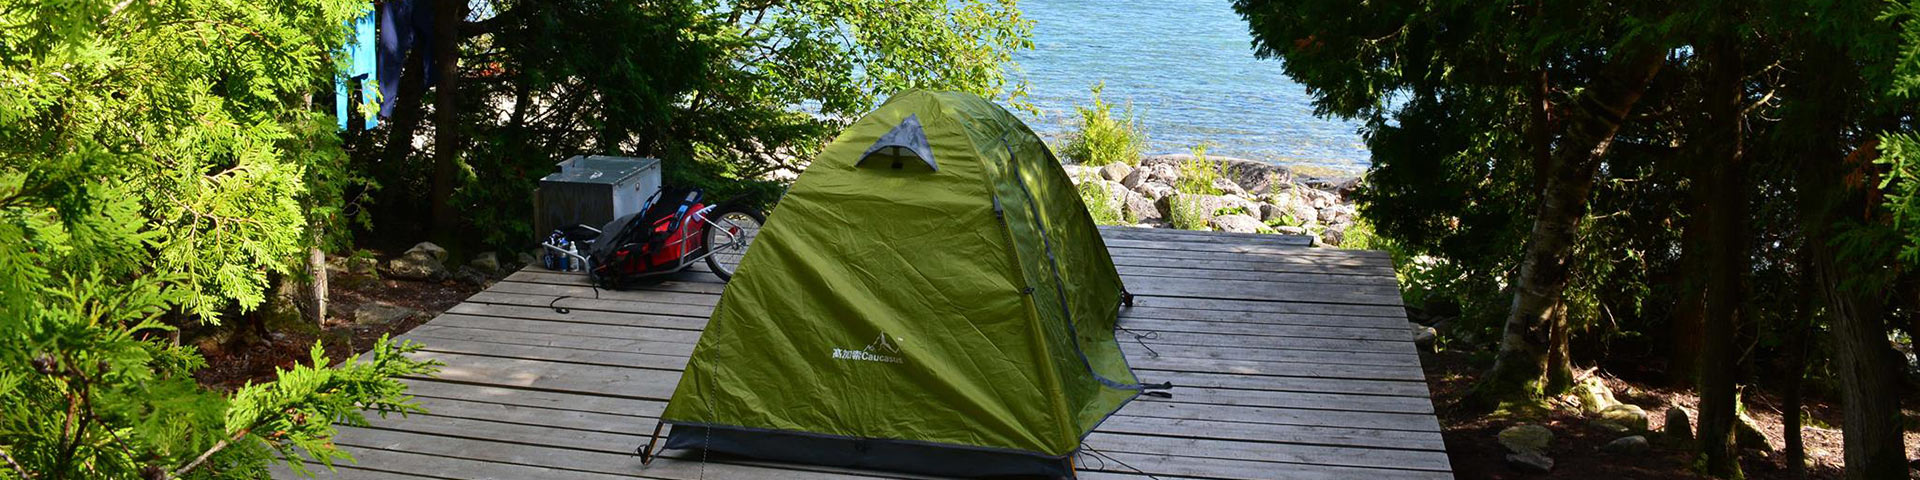 A tent along the shoreline.